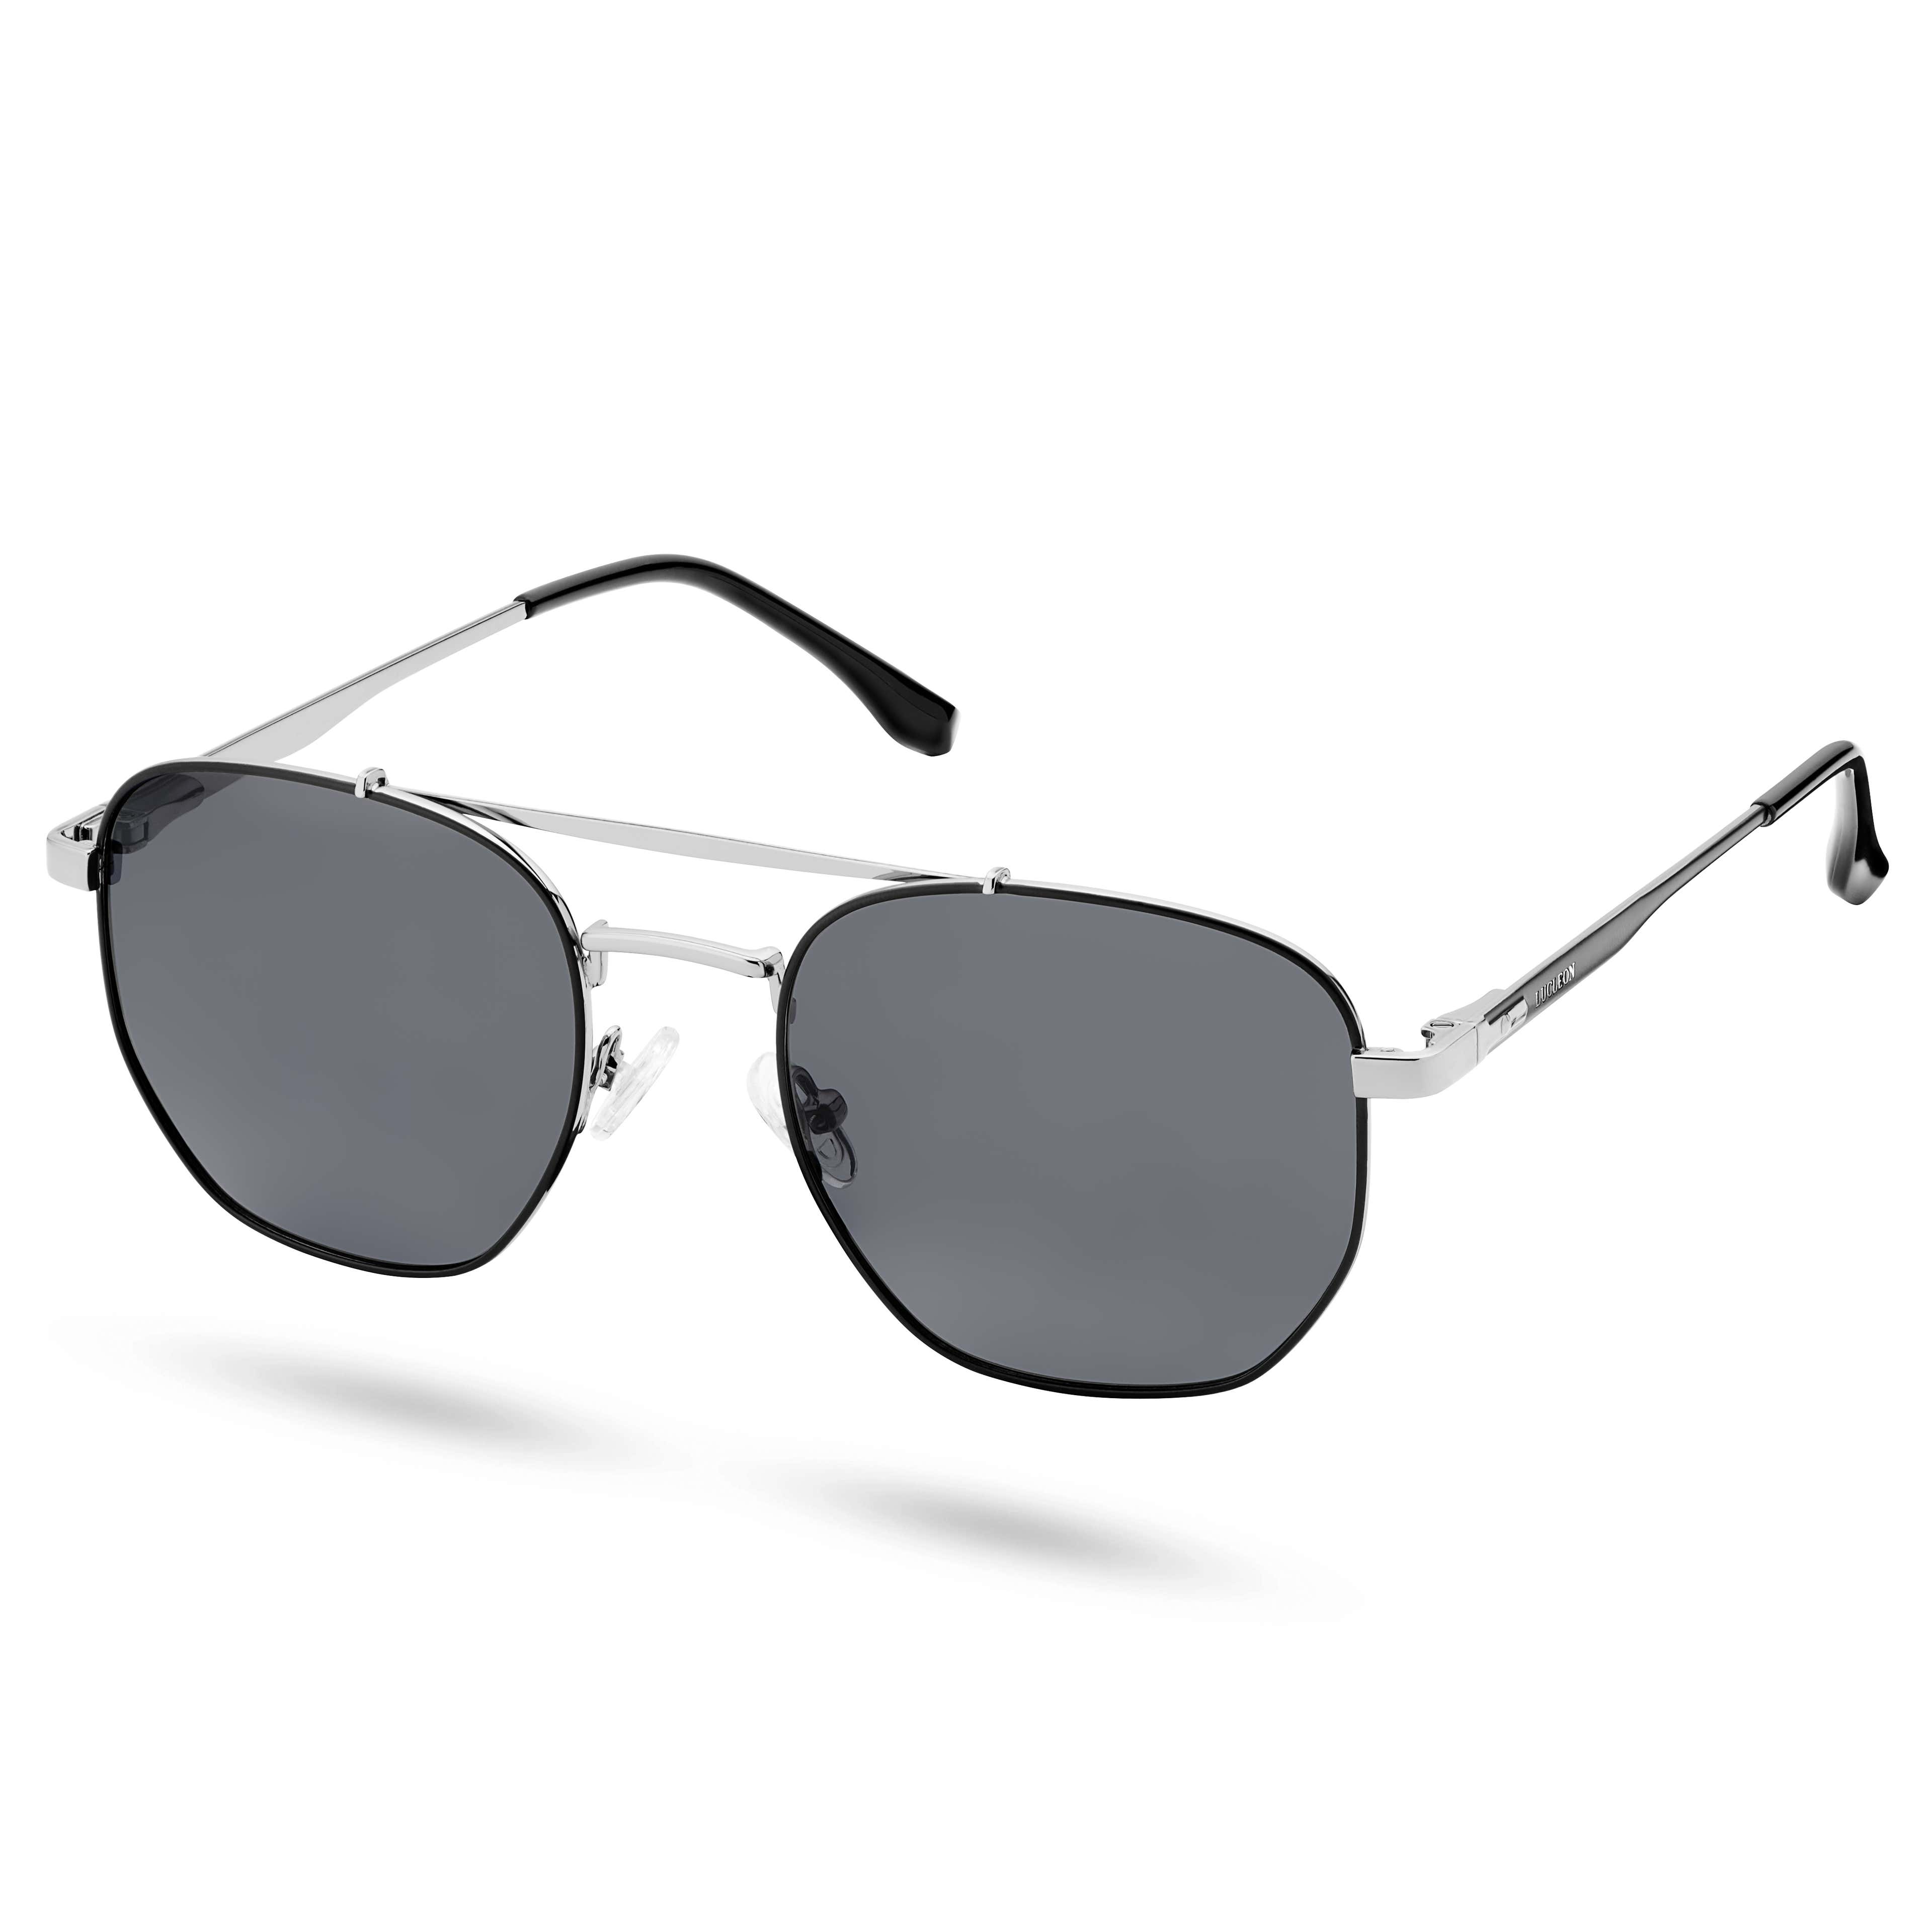 Black & Steel Polarised Rectangular Aviator Sunglasses